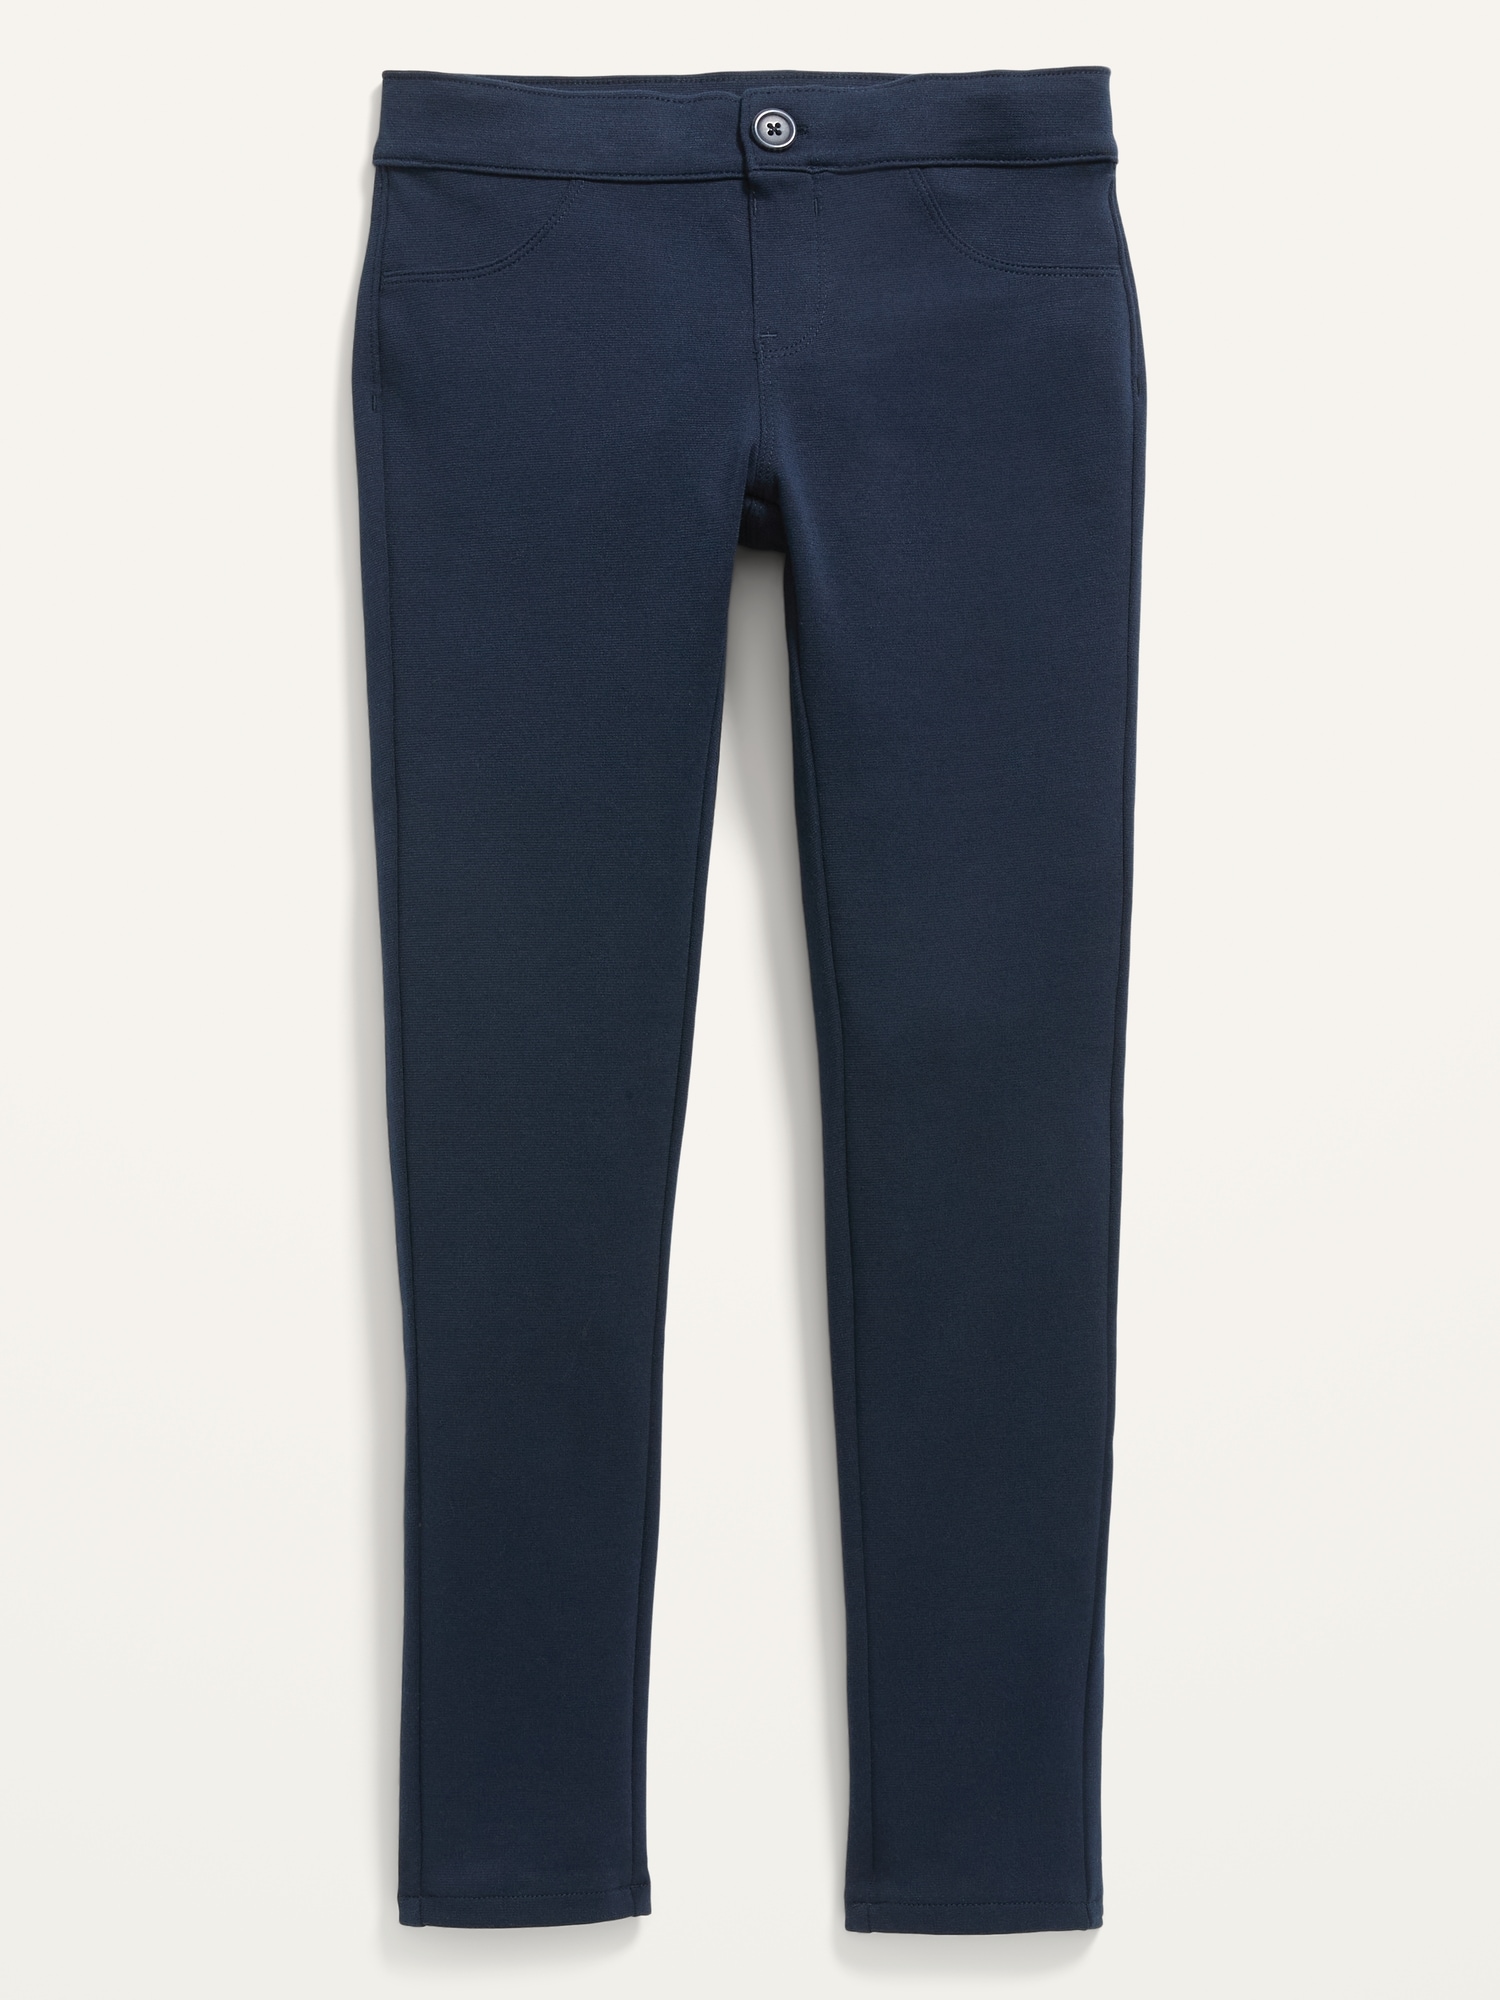 Jyeity Girls Fashion,POROPL Sexy Short Sleeve Solid Color Pants Jumpsuits Fanka  Leggings Navy Size M(US:18) 